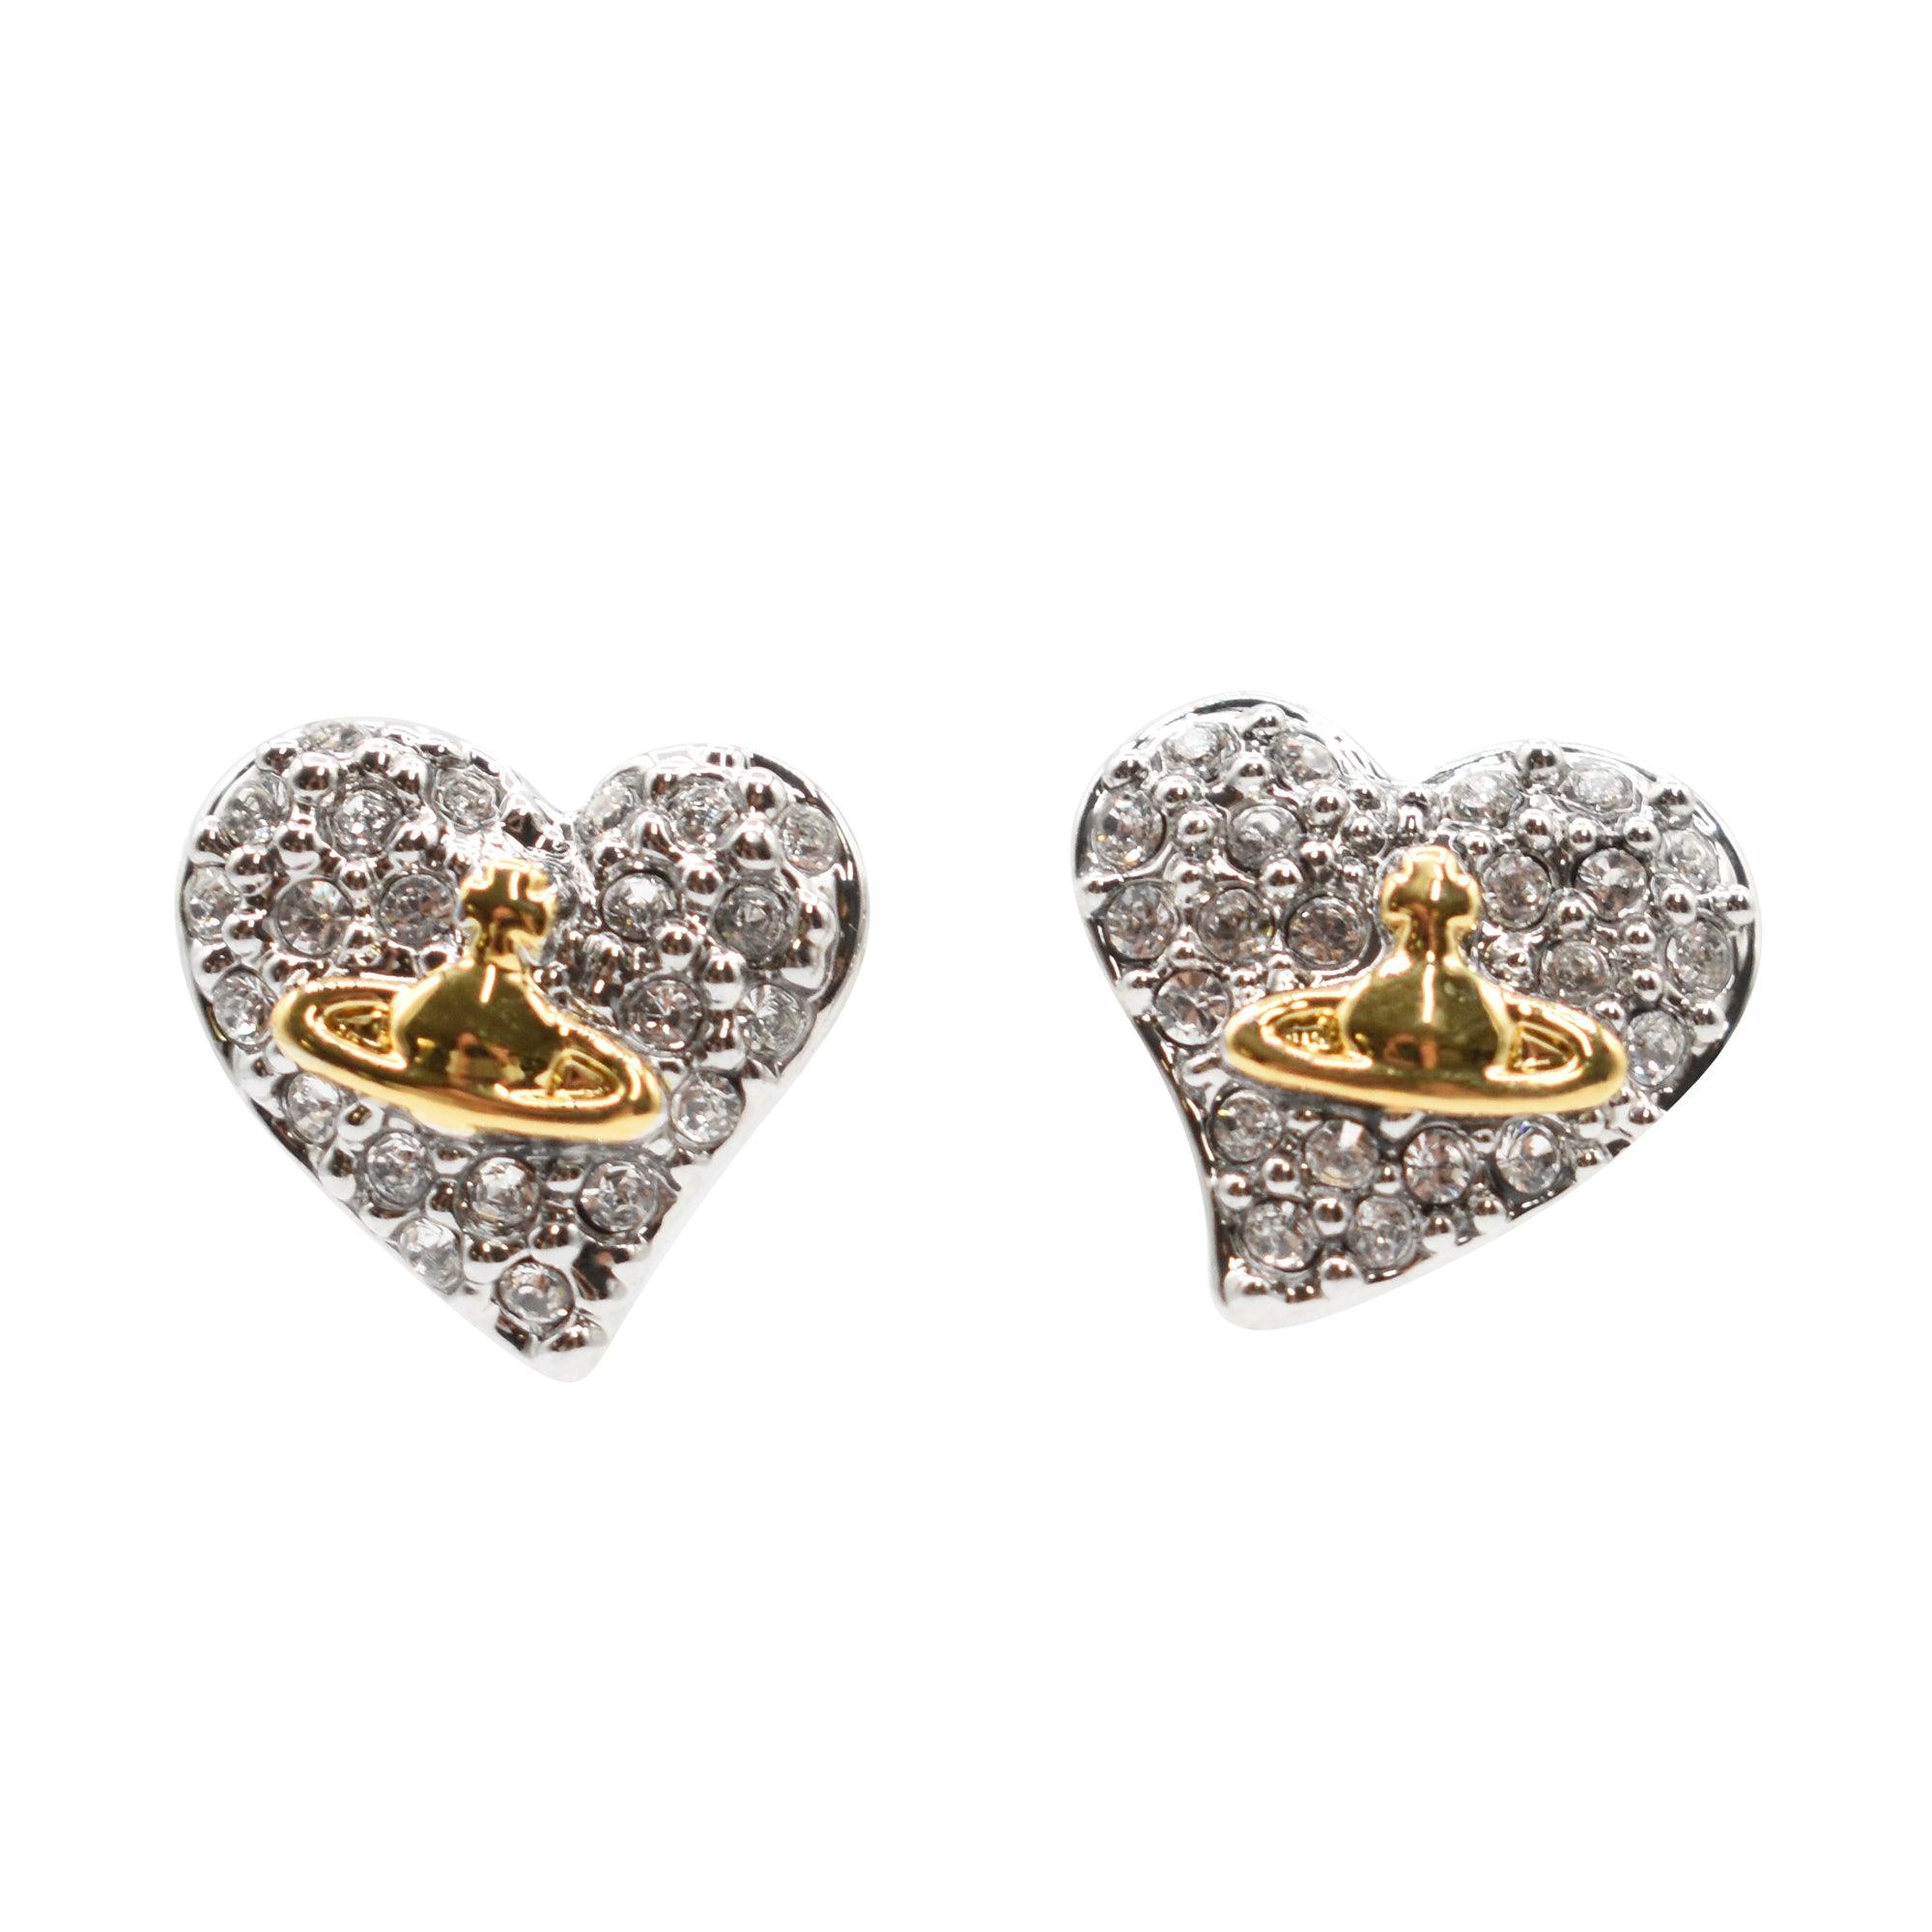 Vivienne Westwood Stud Earrings - Fashionably Yours